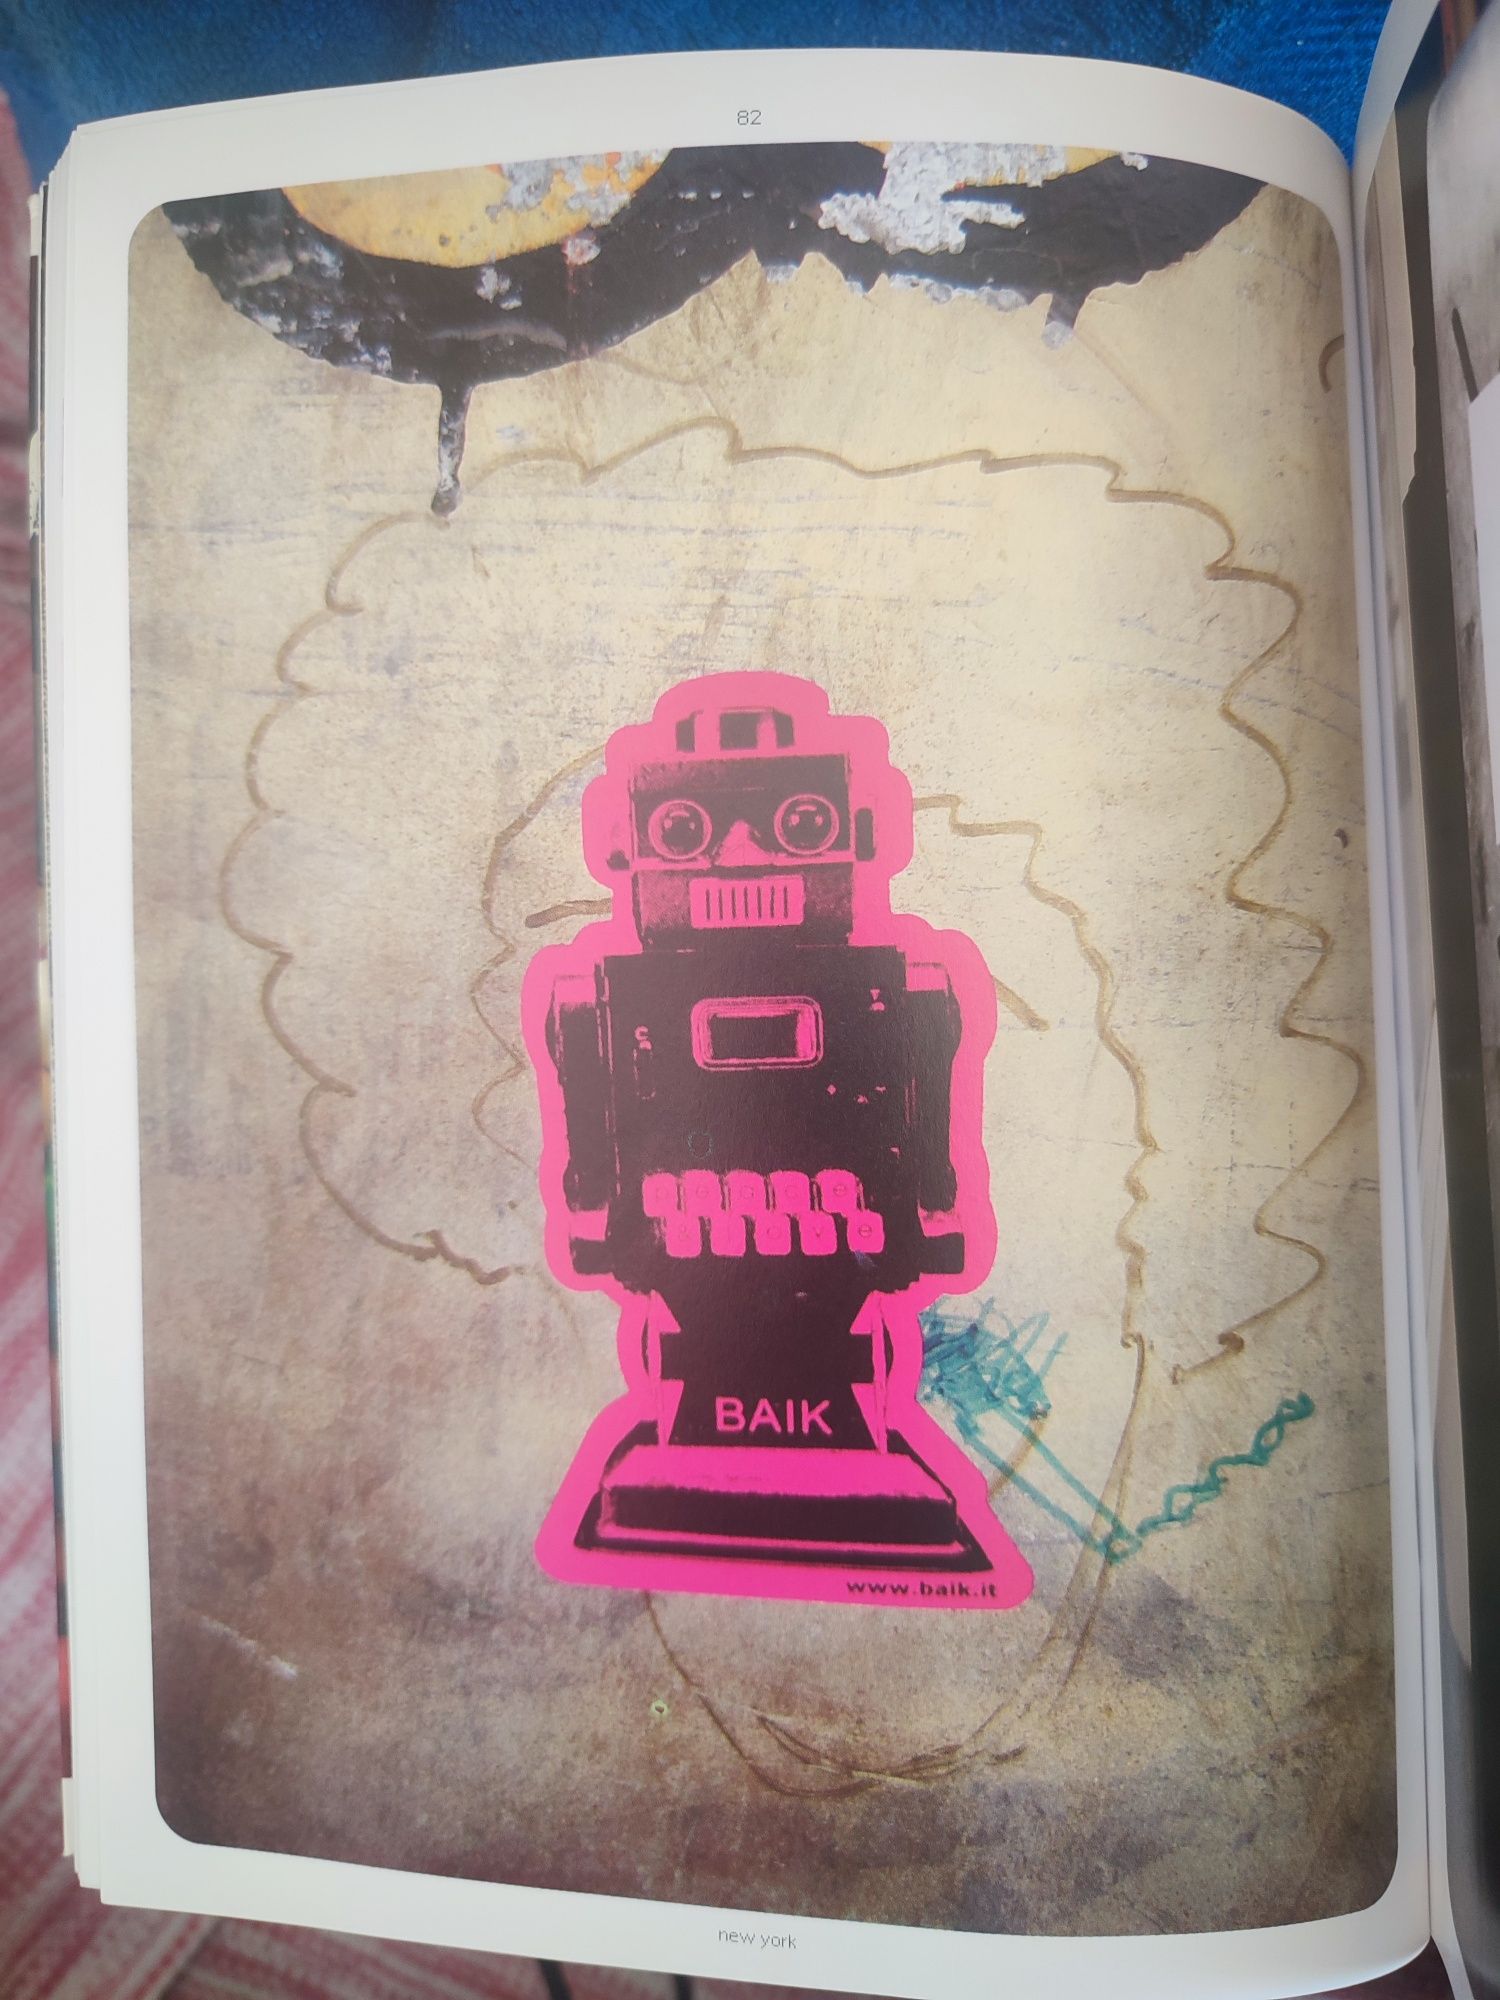 Album naklejki"Street art stickers!"Monsa. Edycja angielsko-hiszpanska